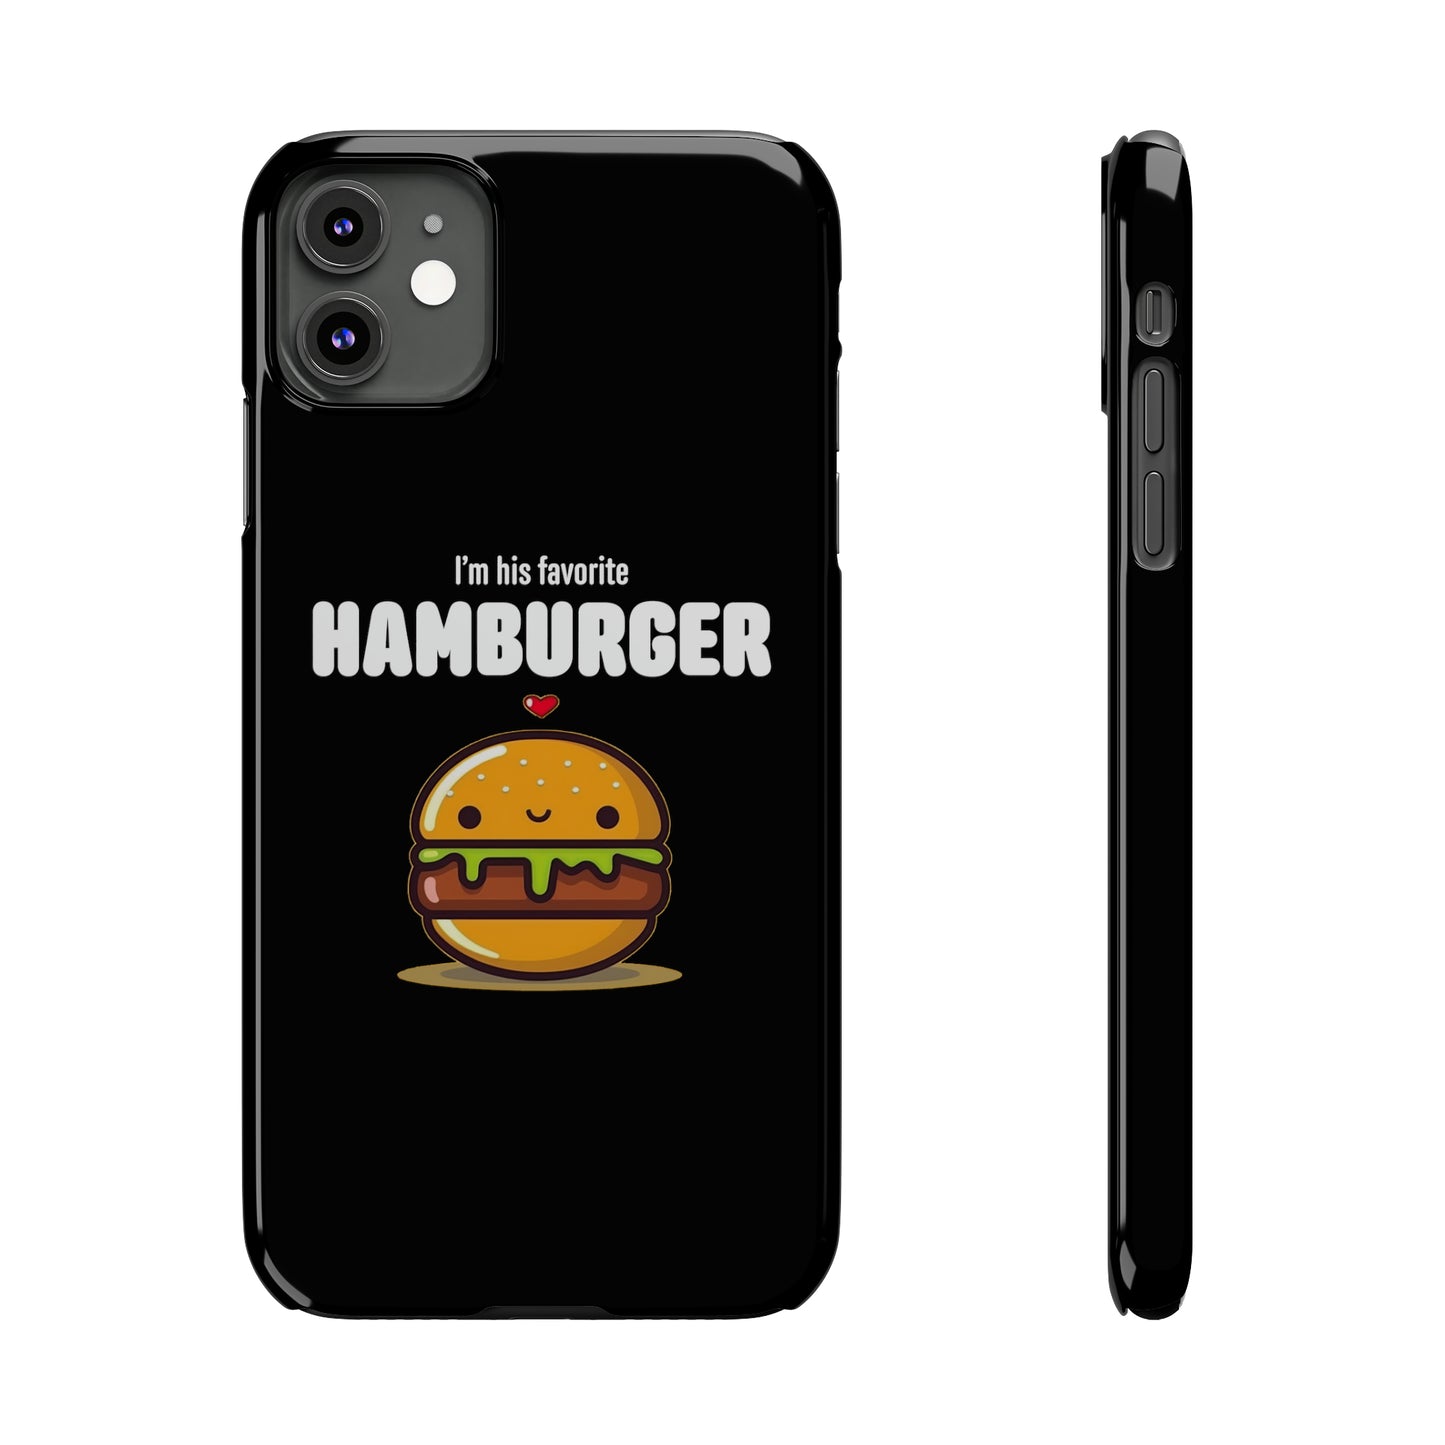 His Favorite Hamburger Black Slim iPhone Case